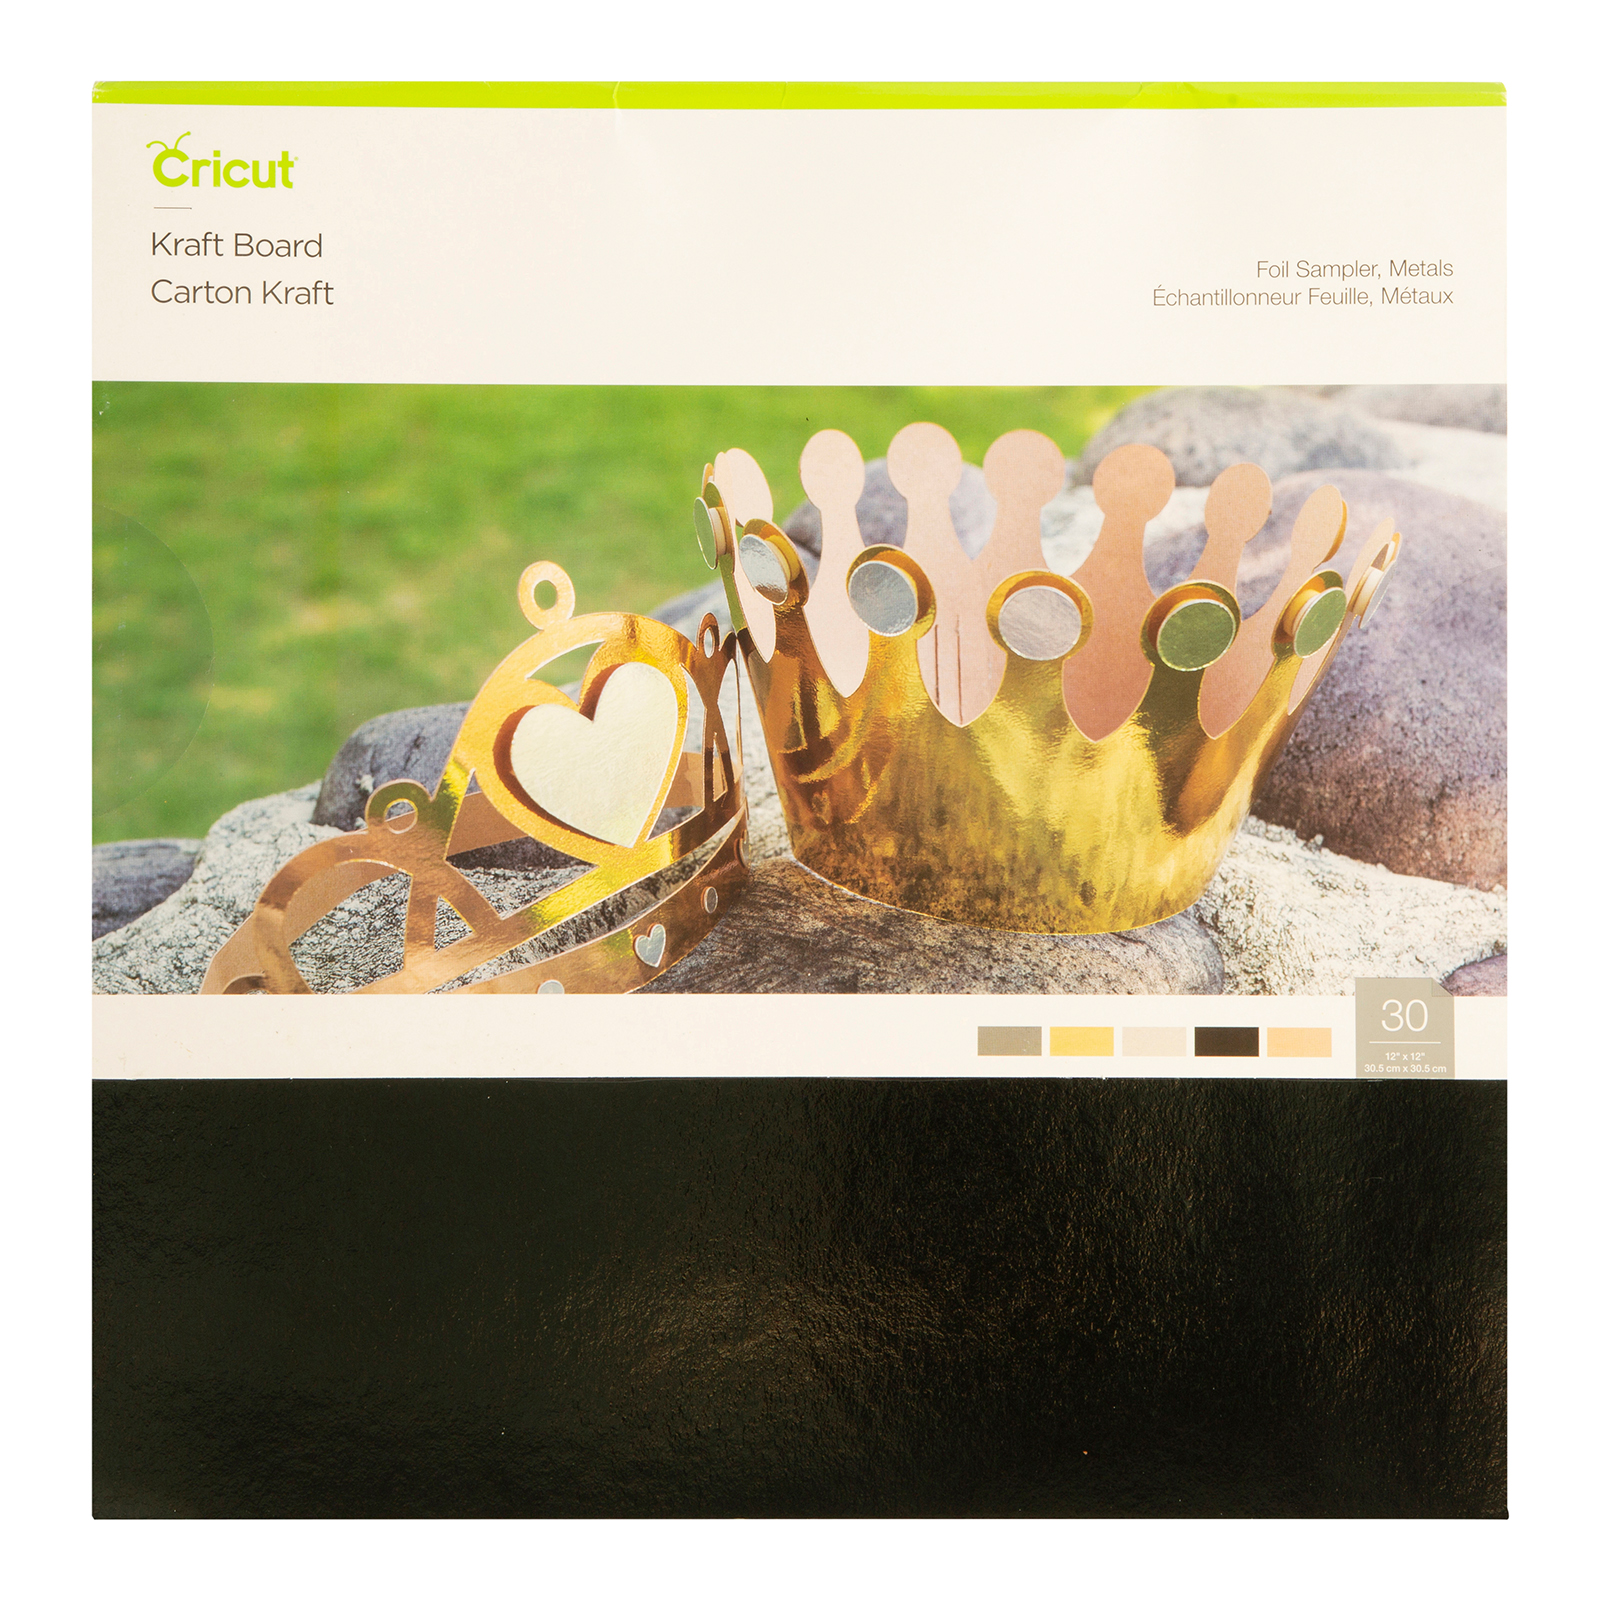 Cricut • Kraft Board Foil Sampler Metals